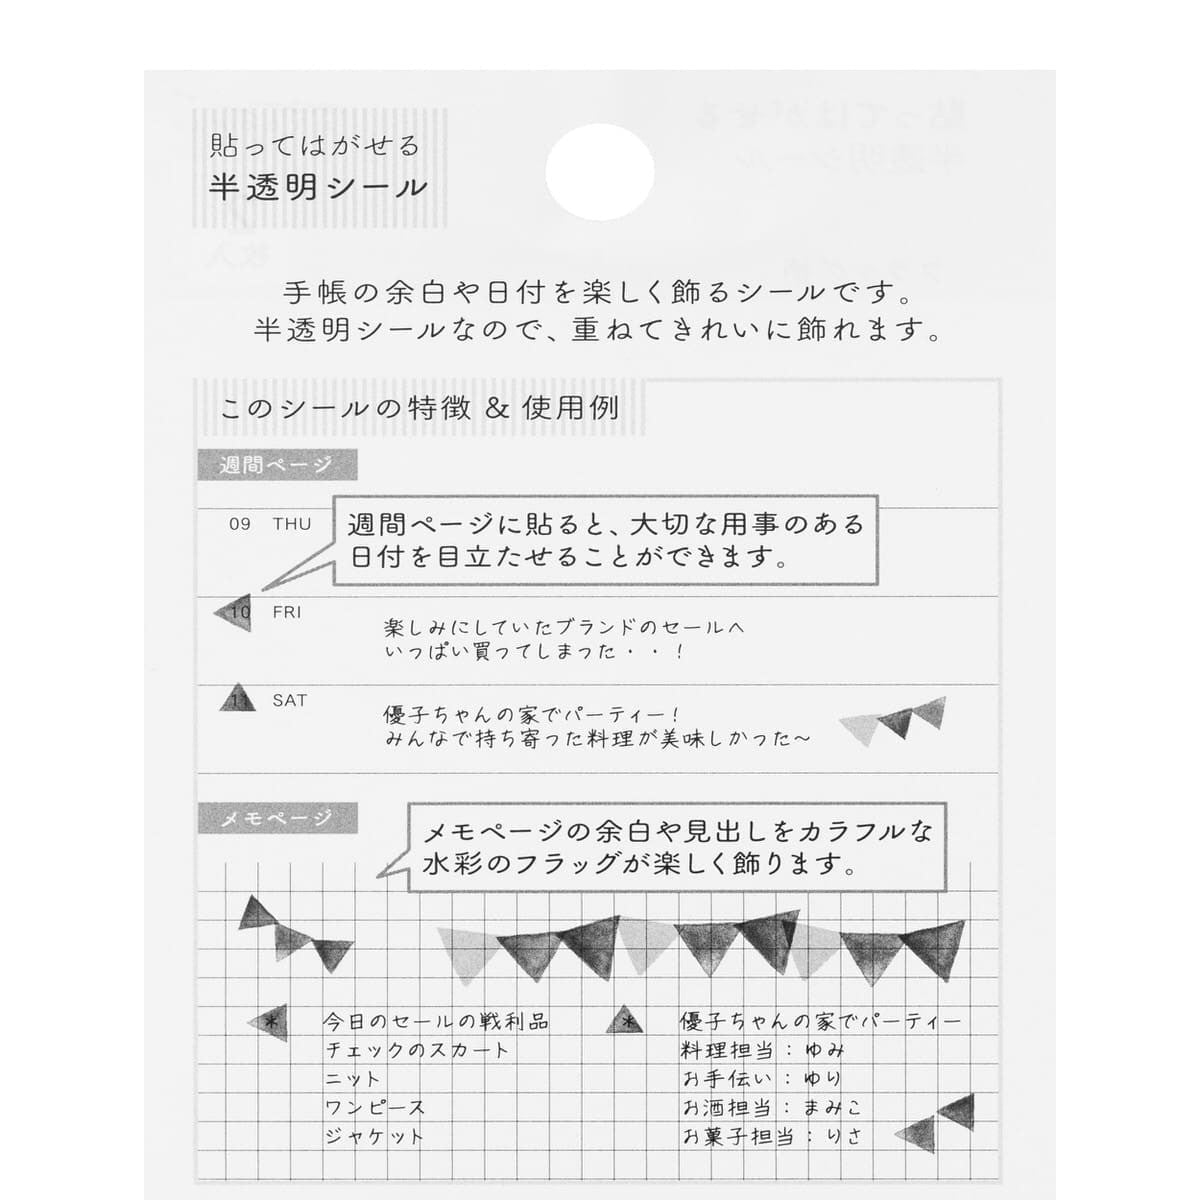 Kalenderstickers Washi stickers Dekoration - Flag - Midori - Tidformera